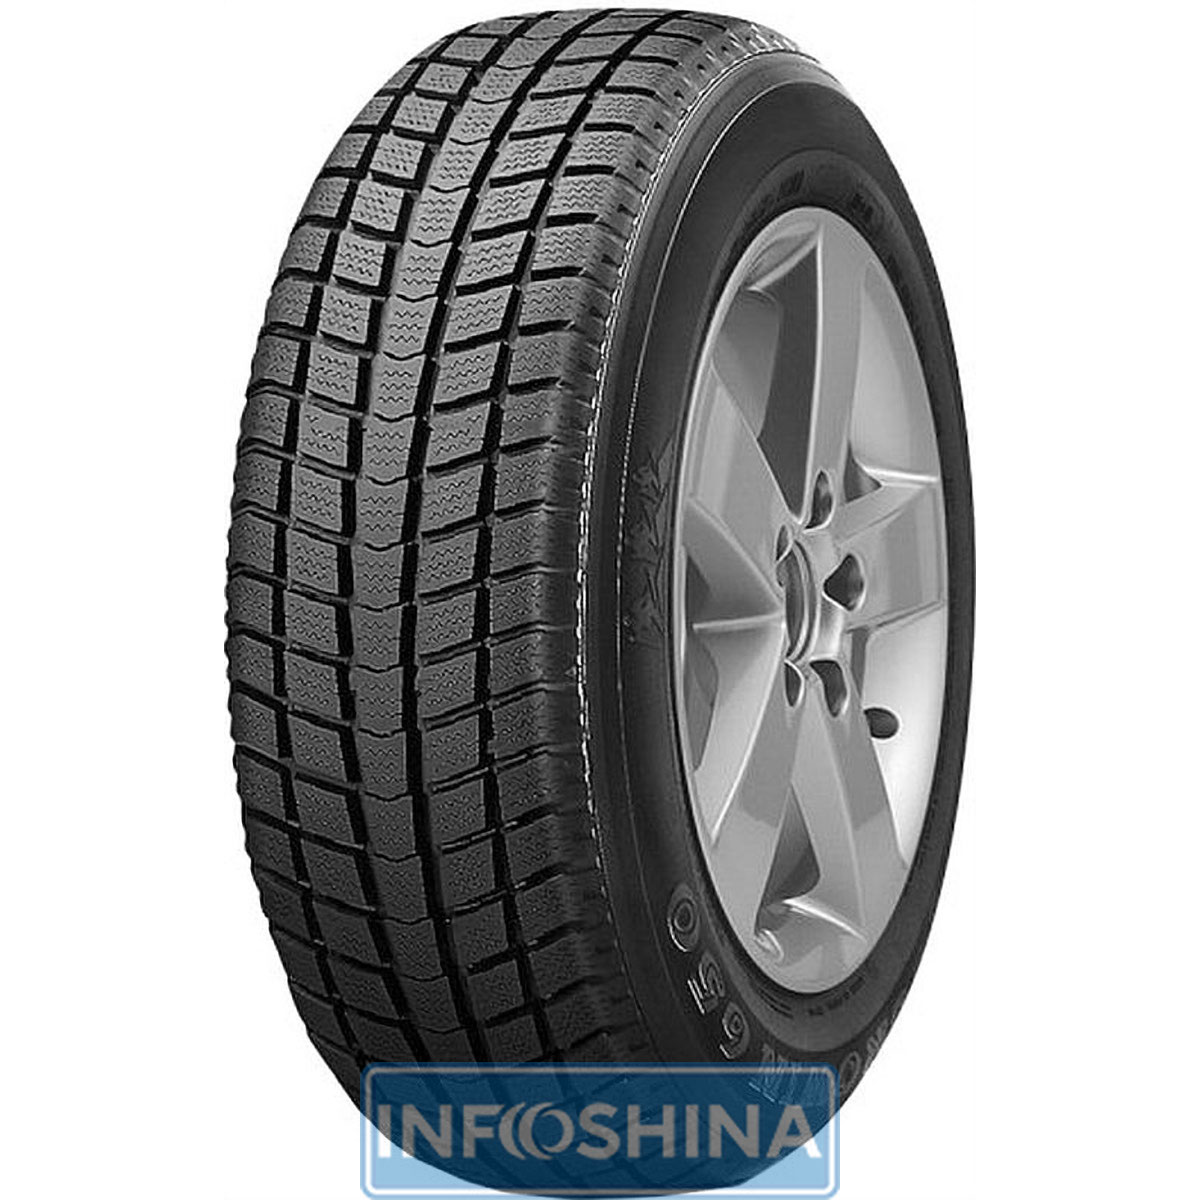 Купить шины Roadstone Euro-Win 650 205/65 R16C 107/105R